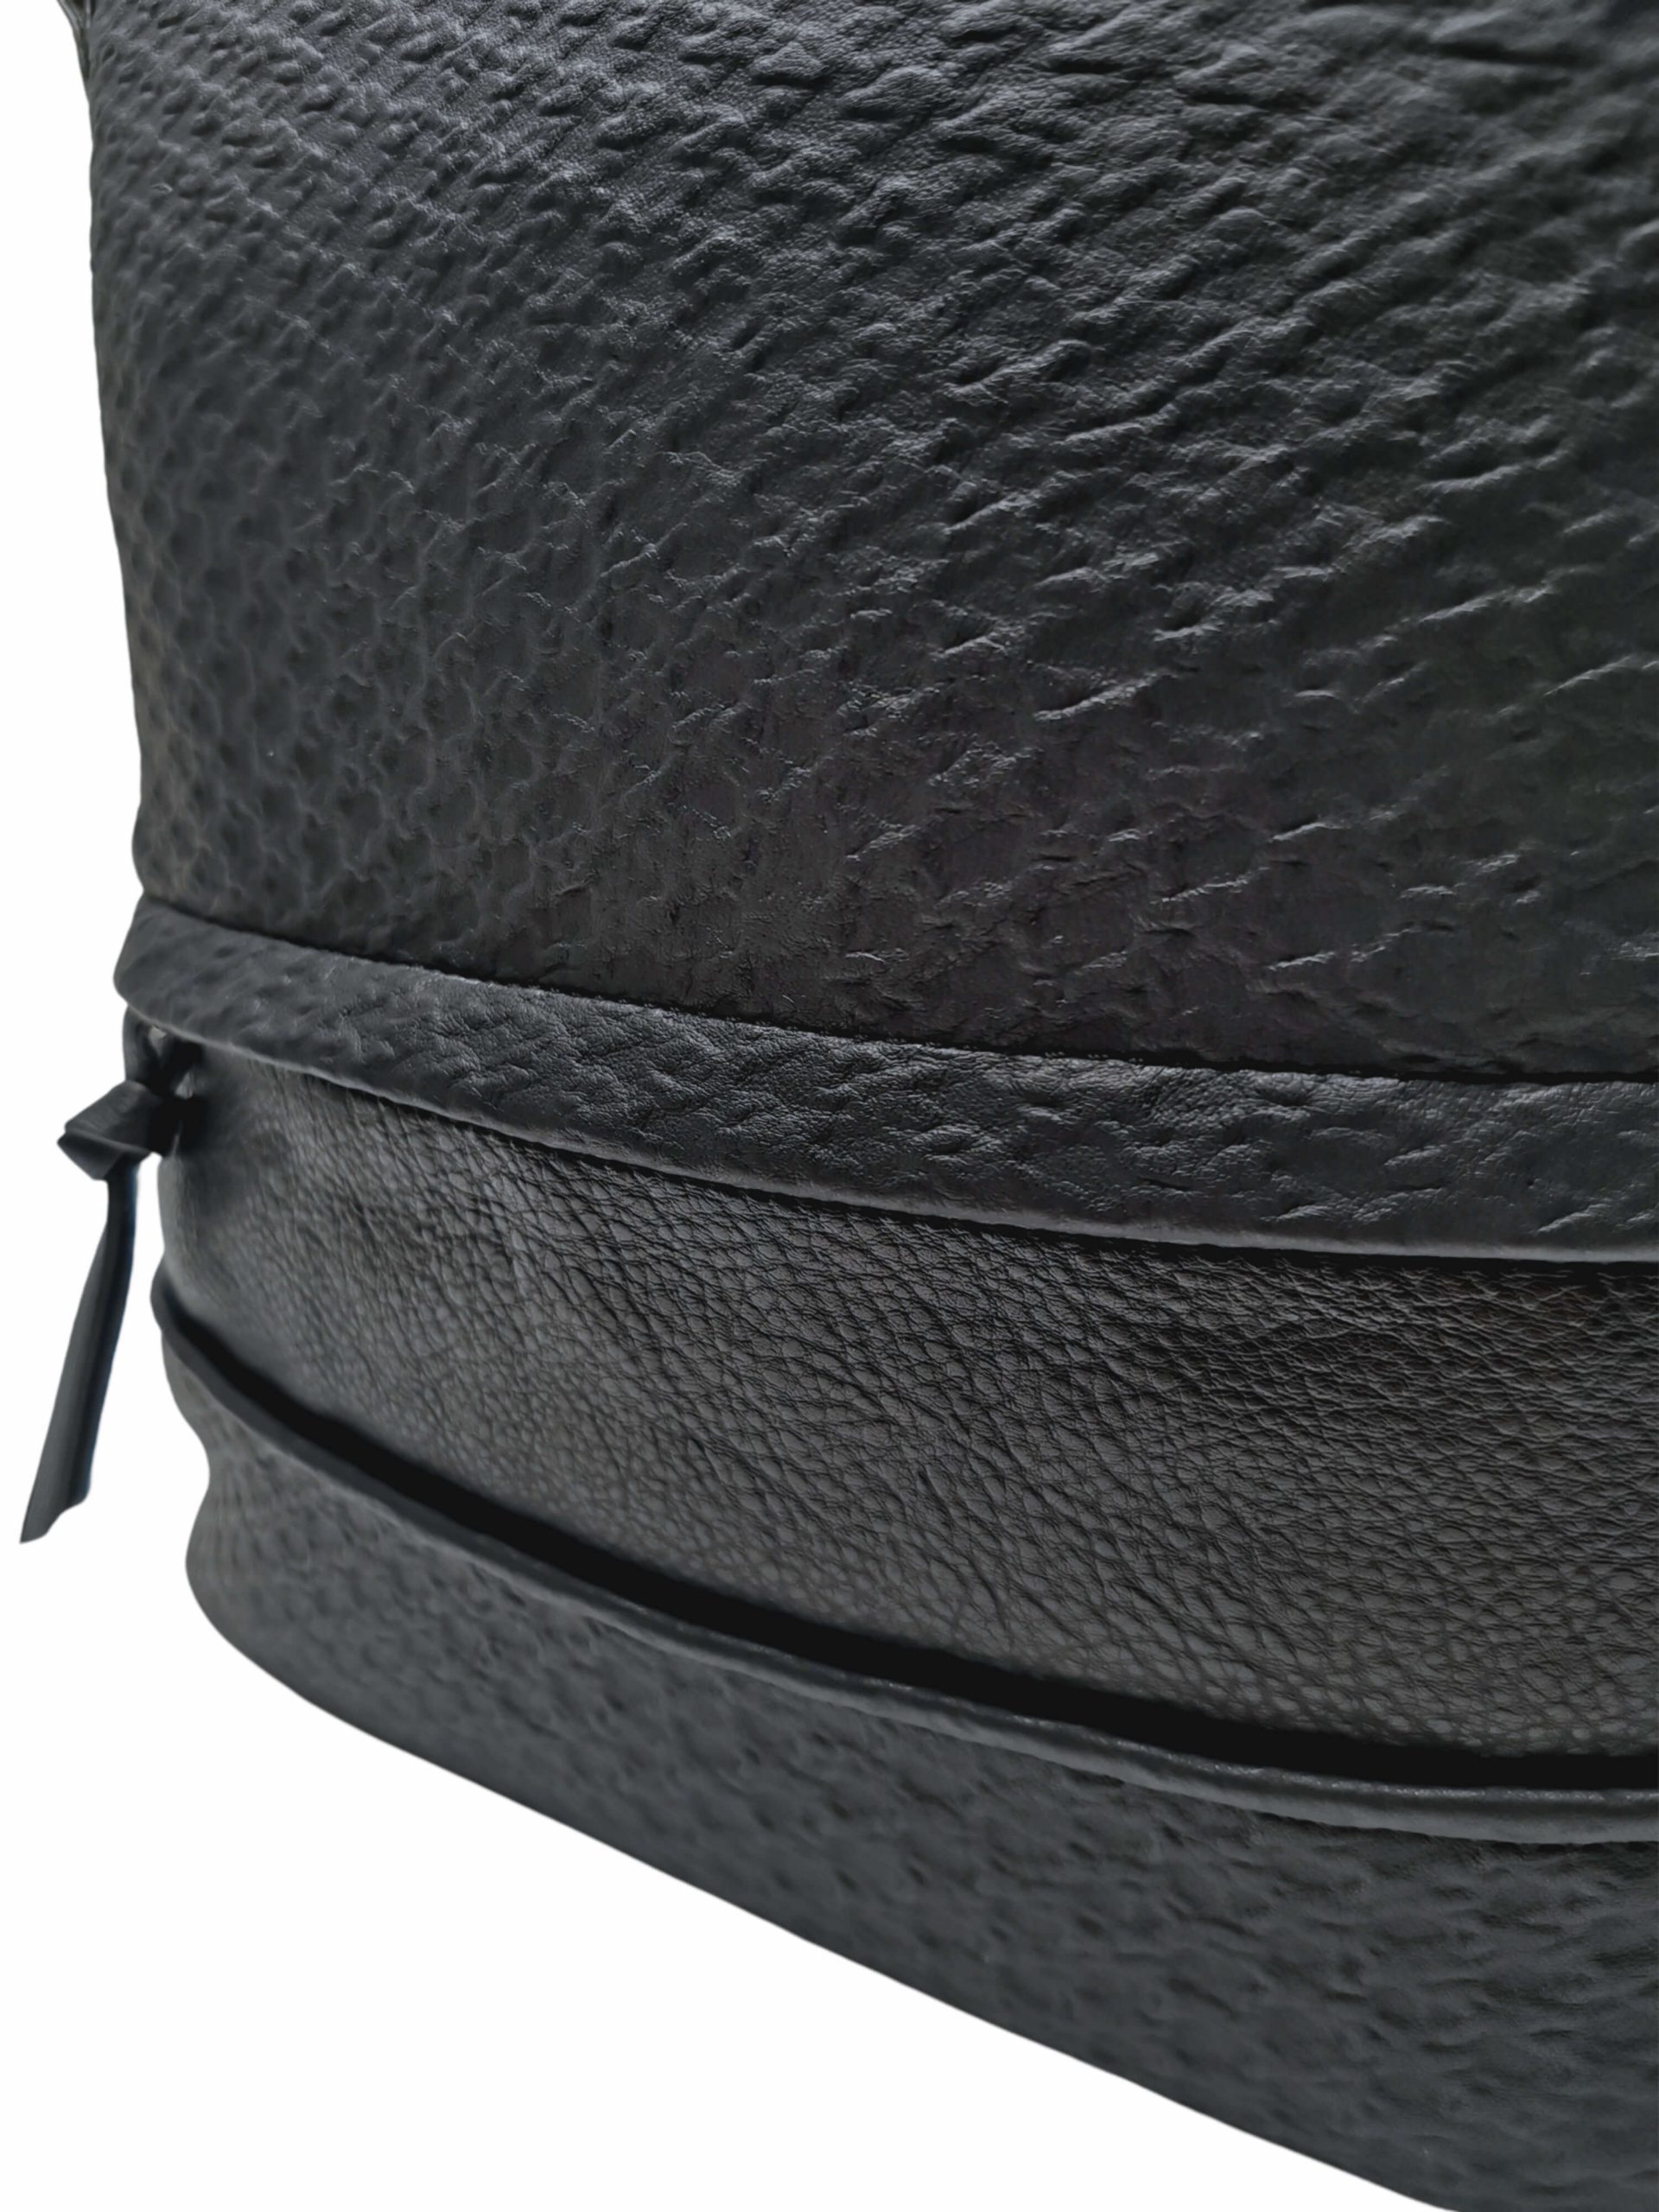 Černá crossbody kabelka se slušivou texturou, Tapple, H2020328, detail vzoru crossbody kabelky